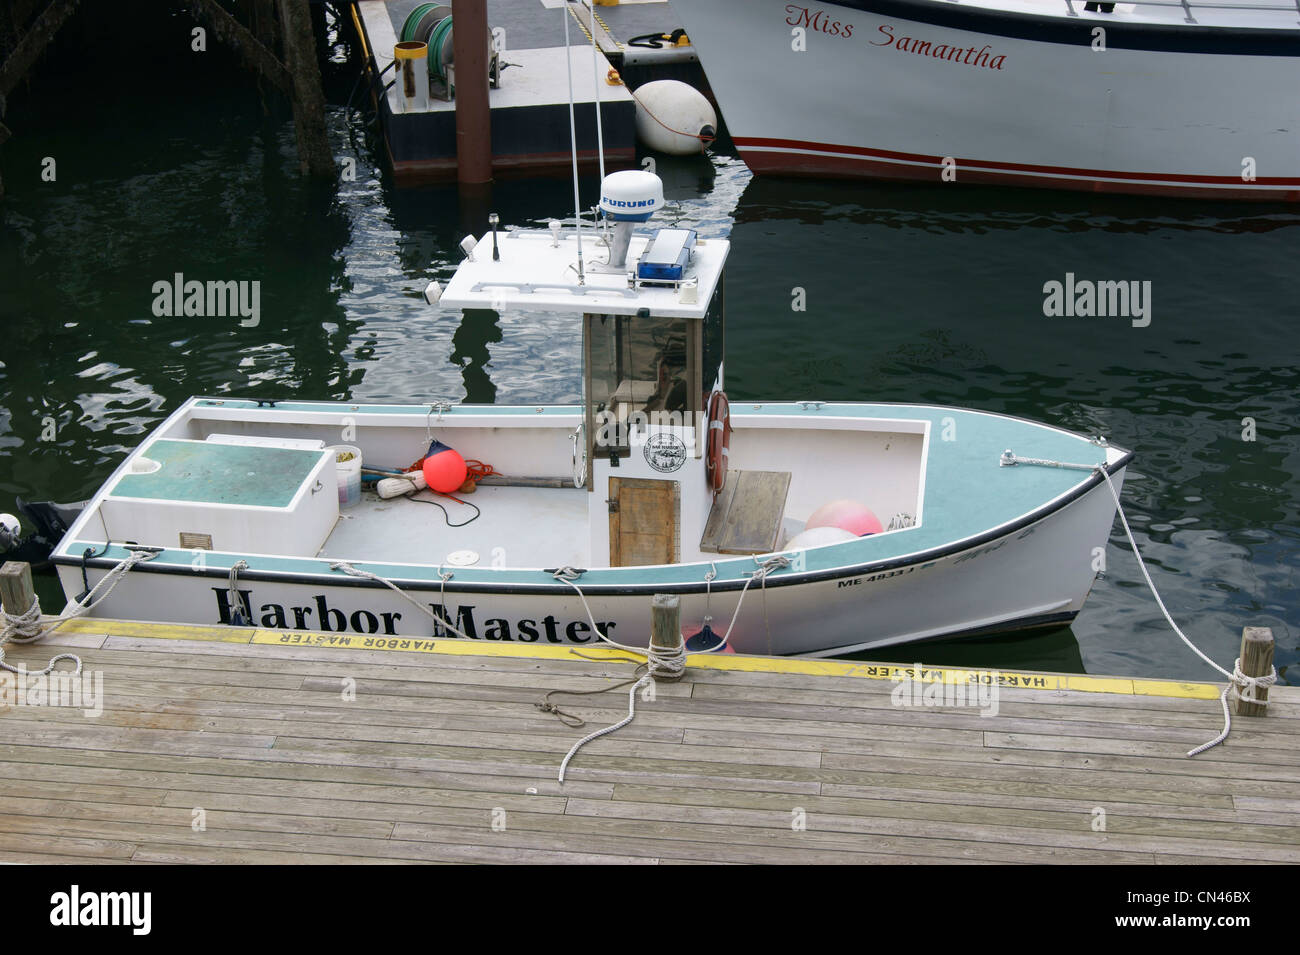 Harbor master boat at dock, Bar Harbor, Maine. Stock Photo